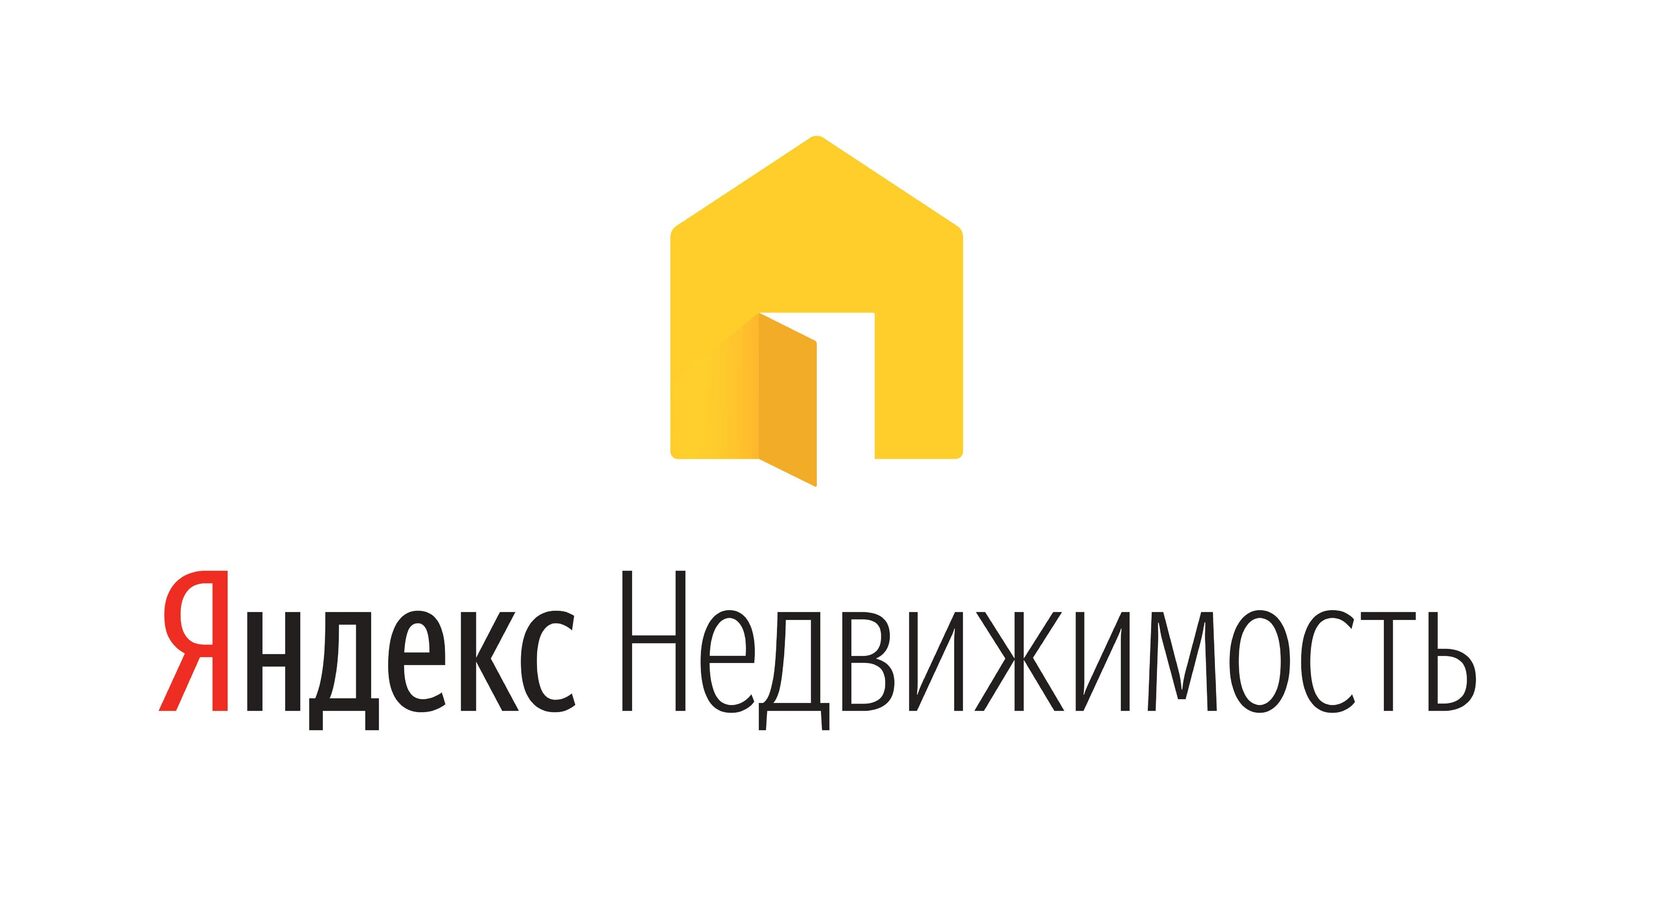 Realty сайт. Логотип агентства недвижимости.